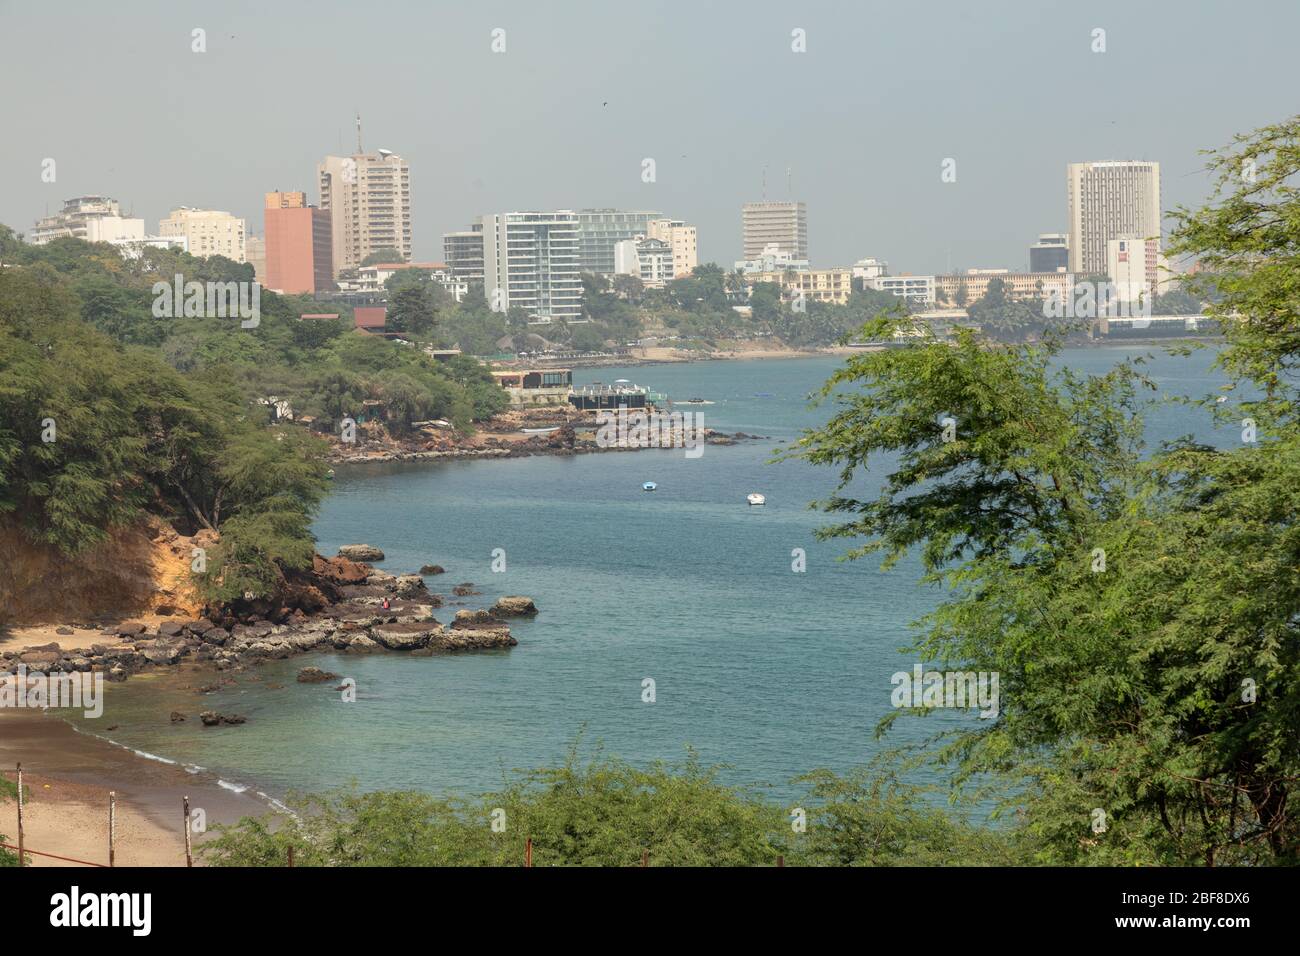 Dakar coastline, beach and vegetation. Dakar. Senegal. West Africa. Stock Photo